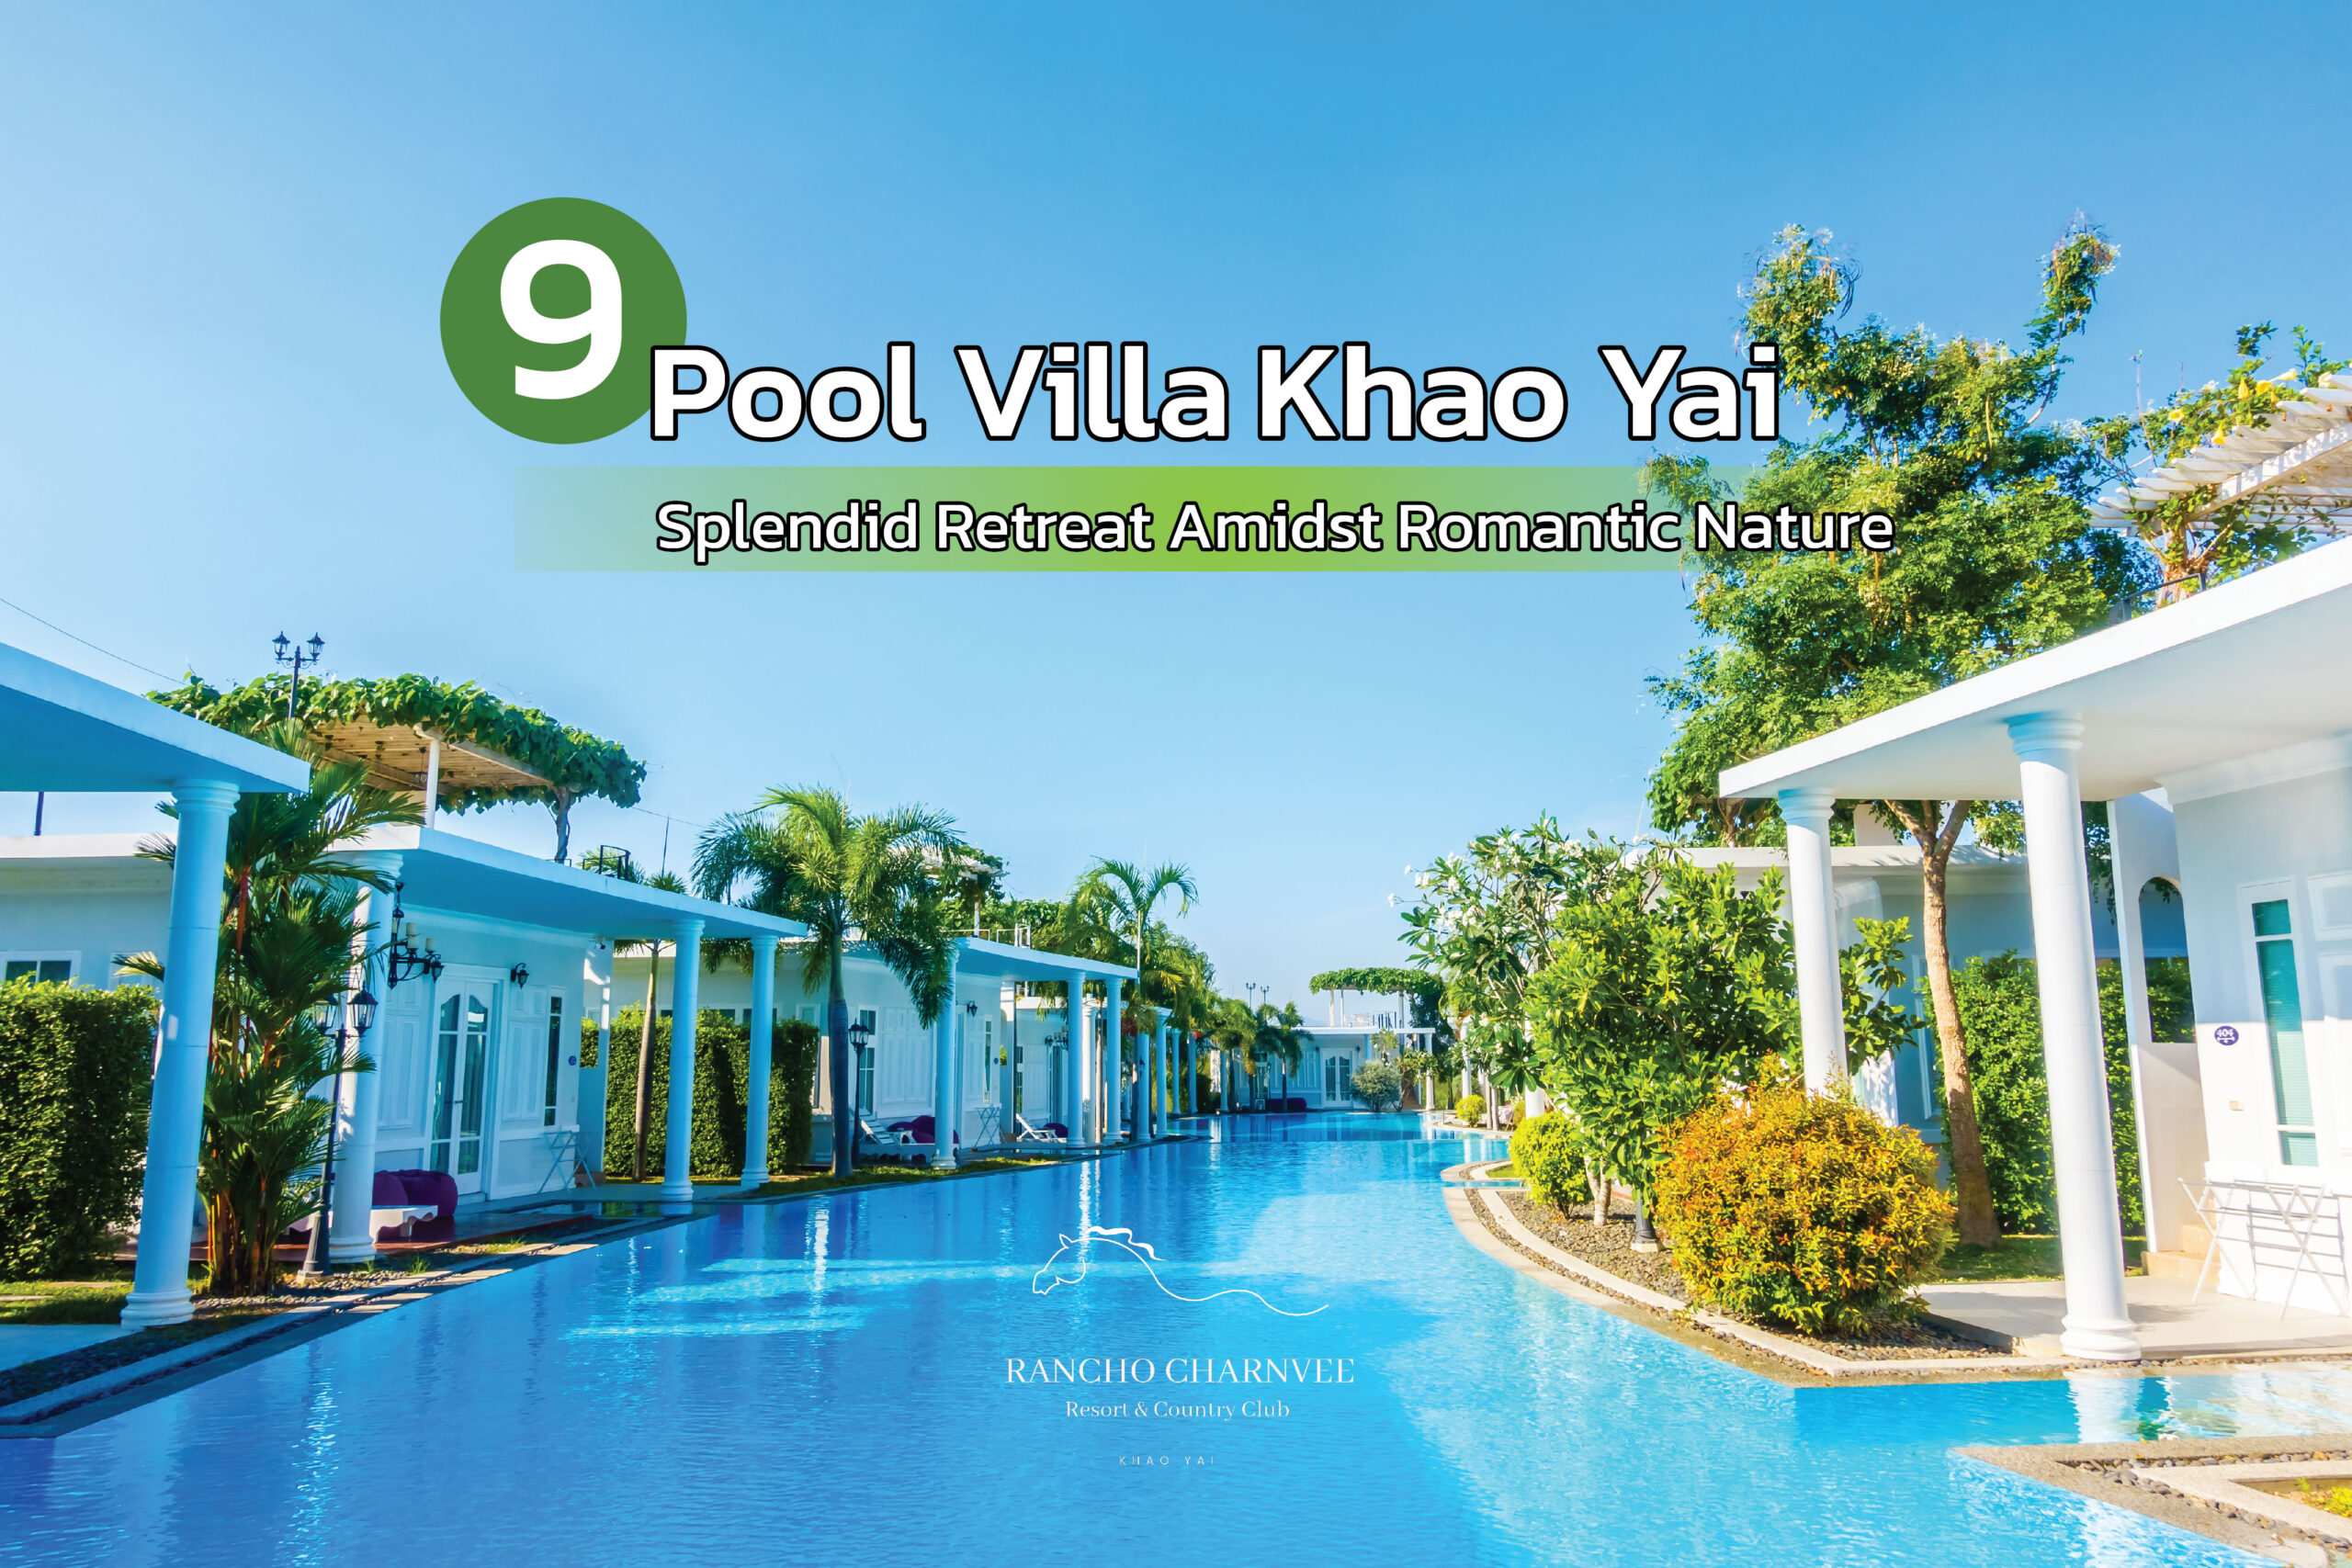 9 Pool Villa Khao Yai: Splendid Retreat Amidst Romantic Nature